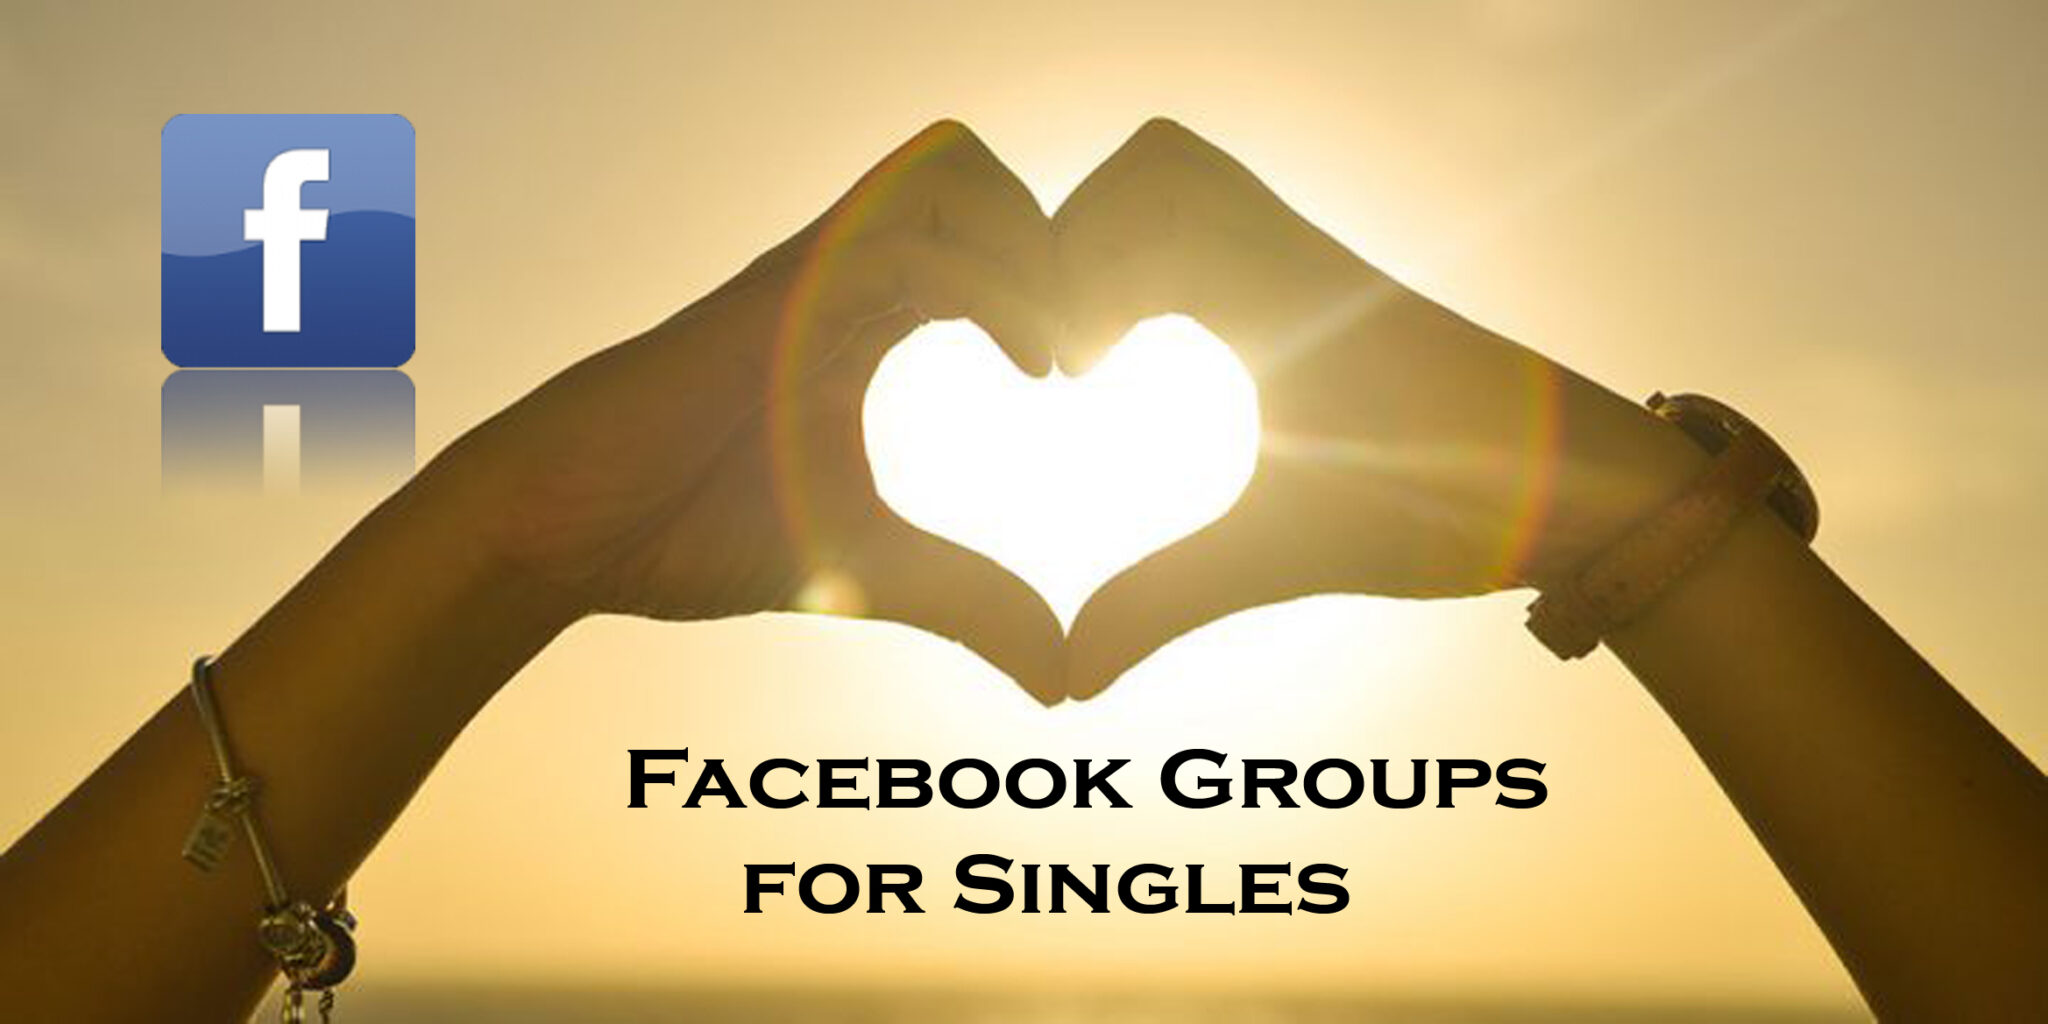 Facebook Groups for Singles - Facebook Groups for Hookups